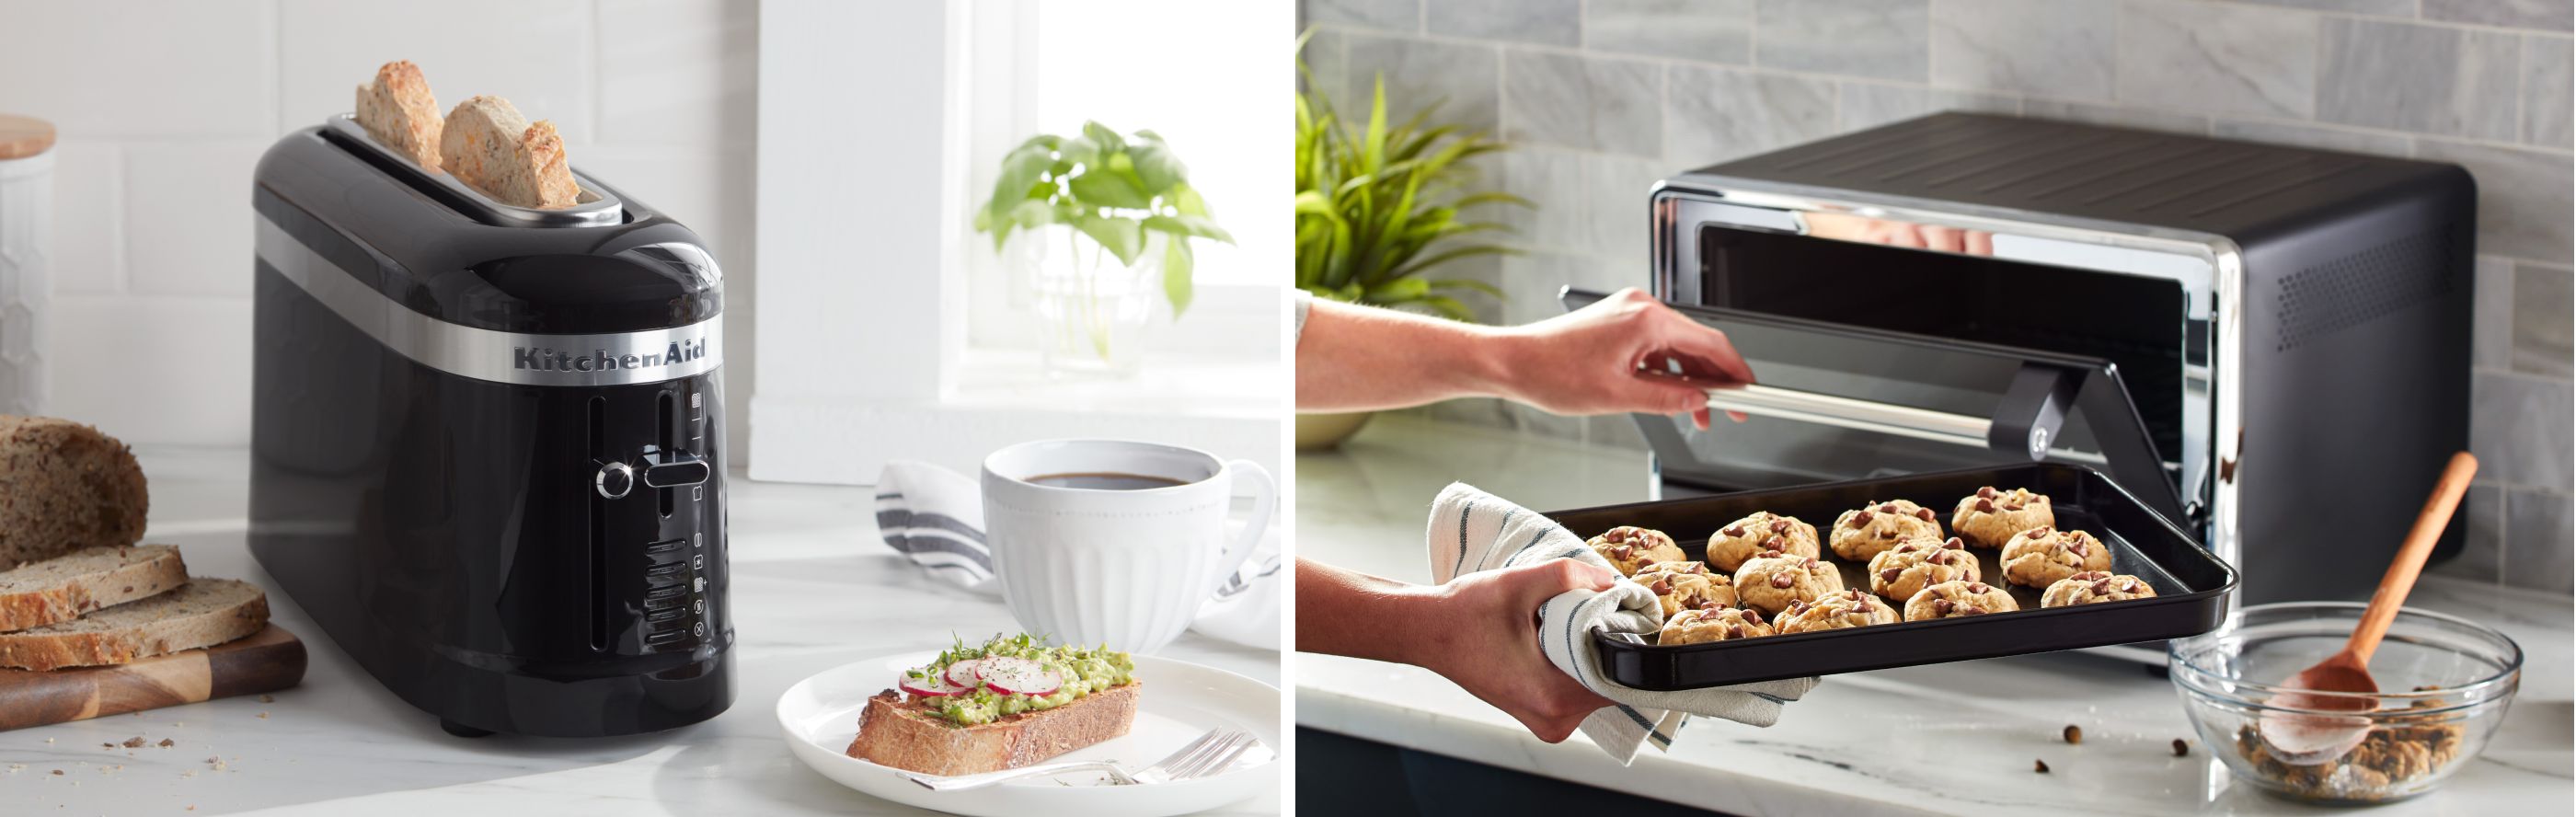 A black KitchenAid® toaster and sandwich; a black KitchenAid® toaster oven and chocolate chip cookies